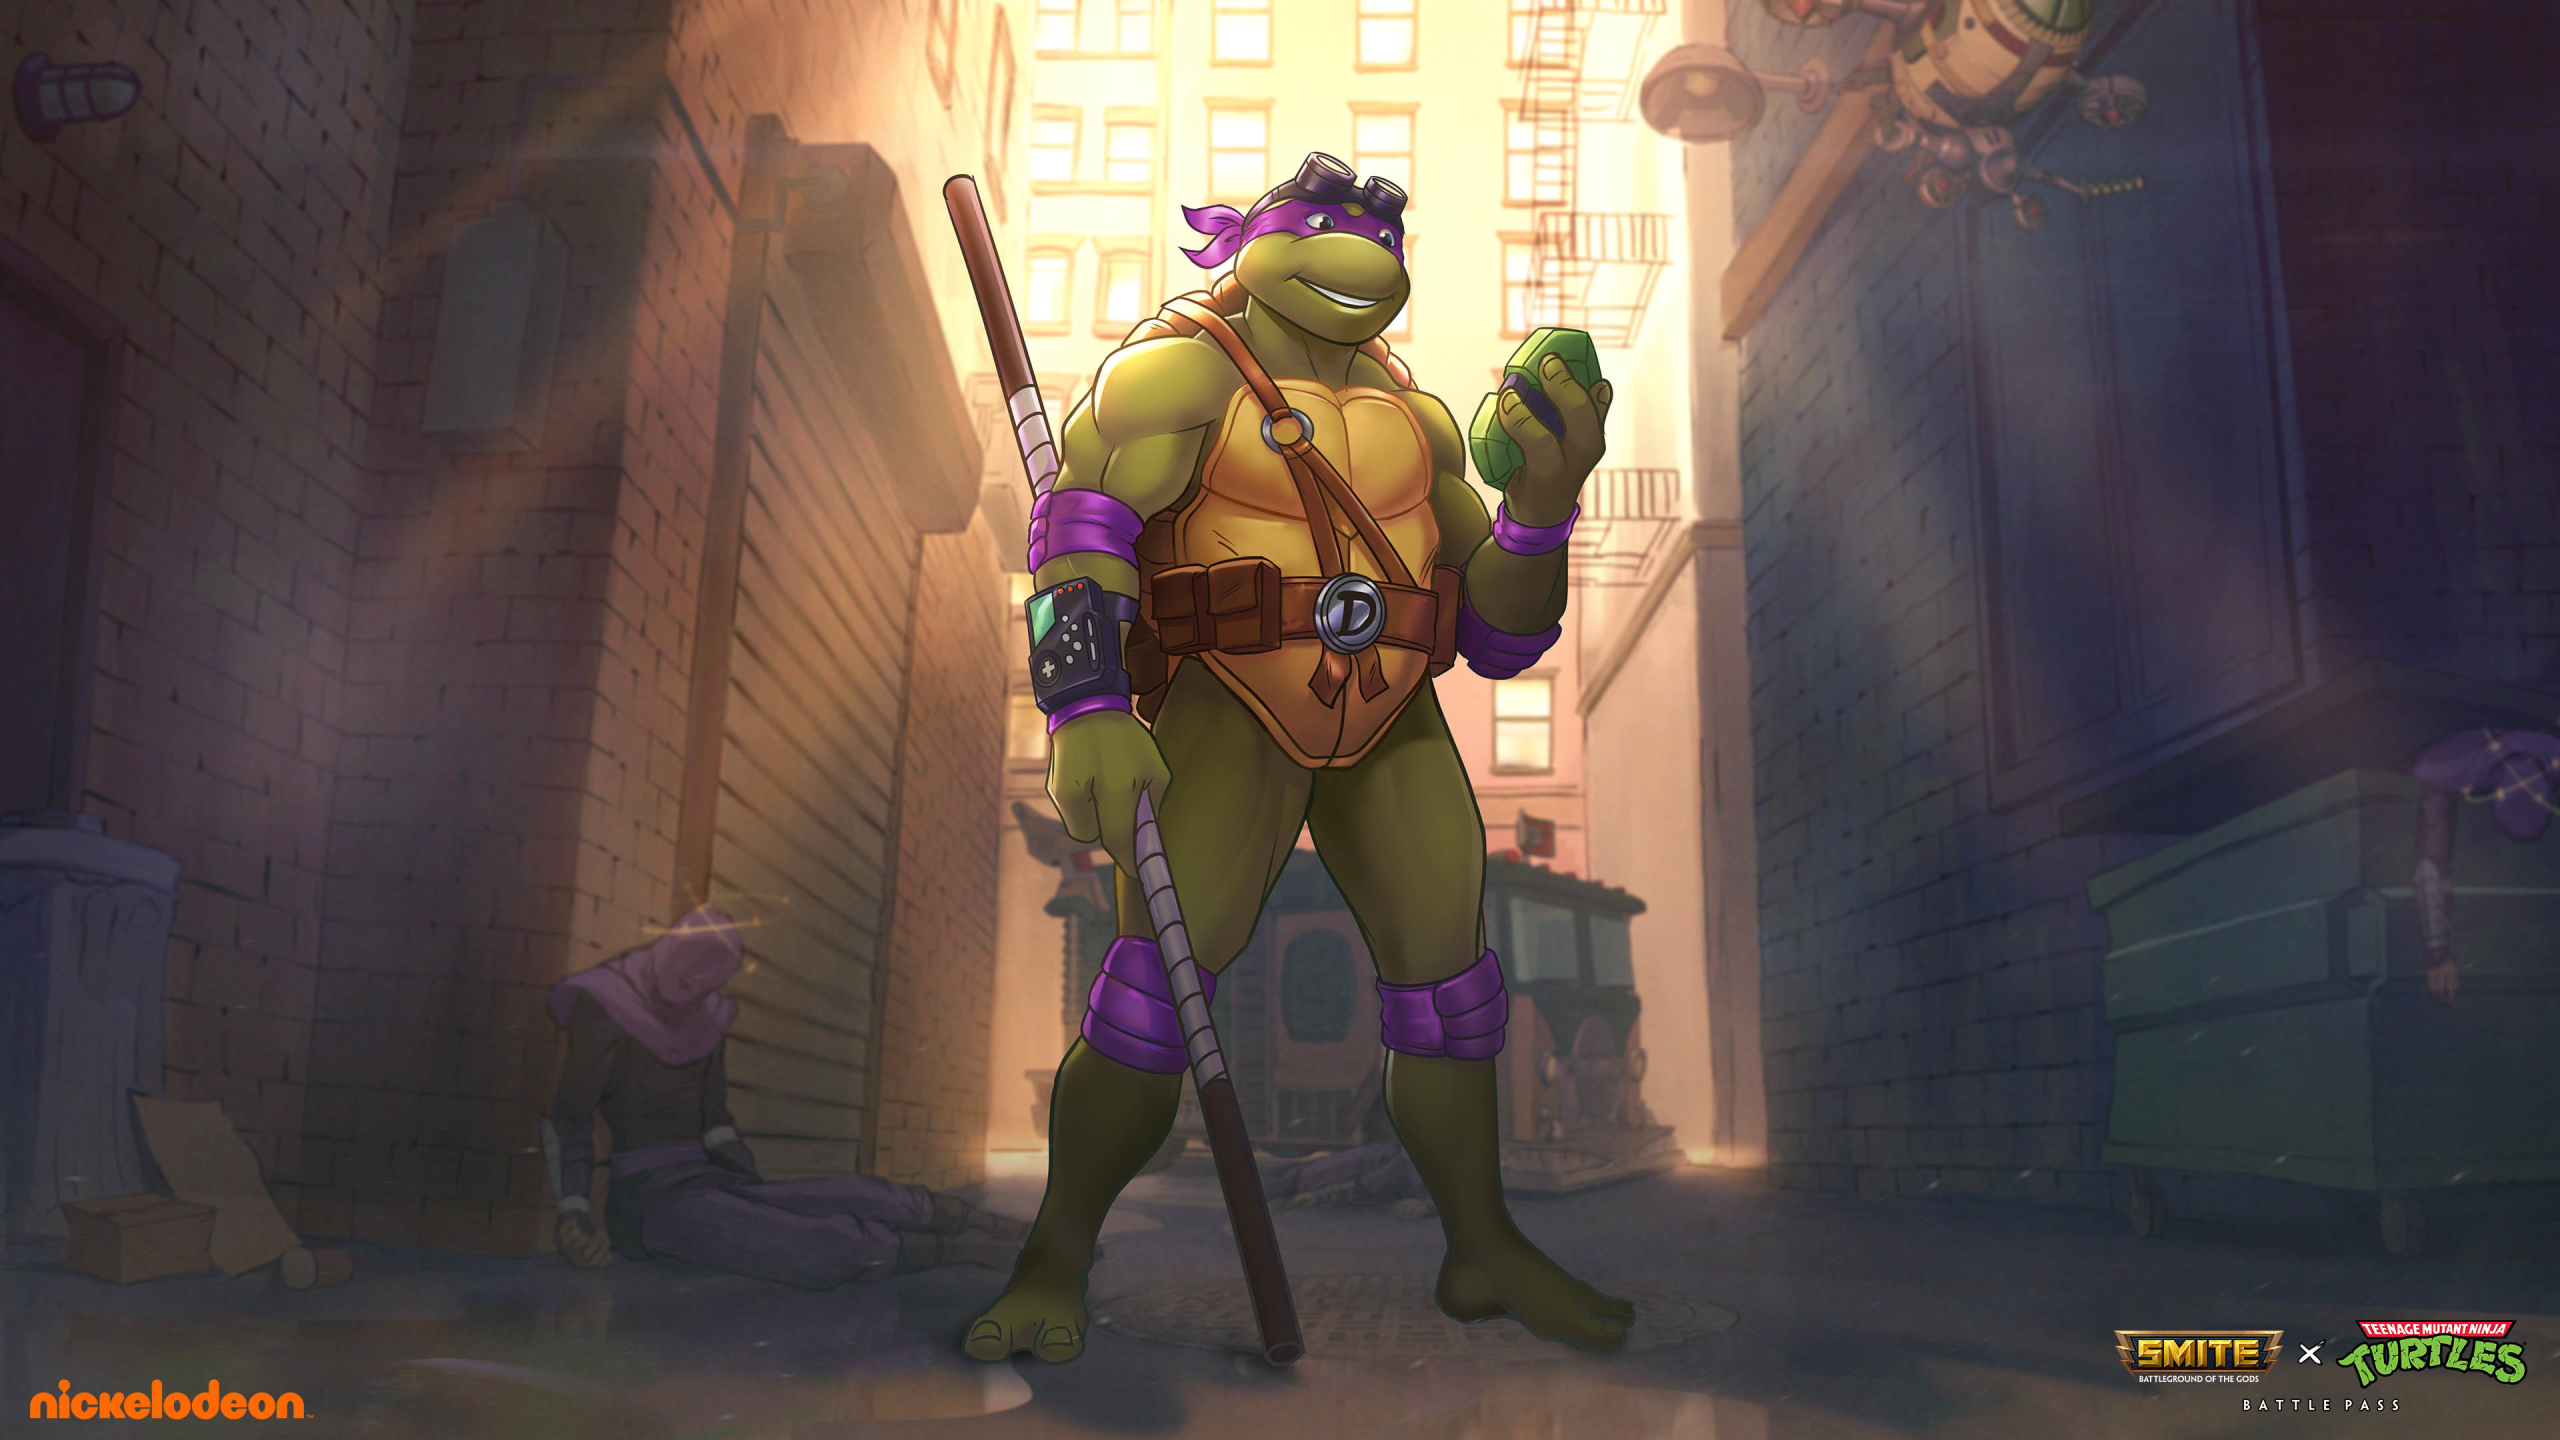 Baixar papel de parede para celular de Videogame, Donatello (Tmnt), Smite gratuito.